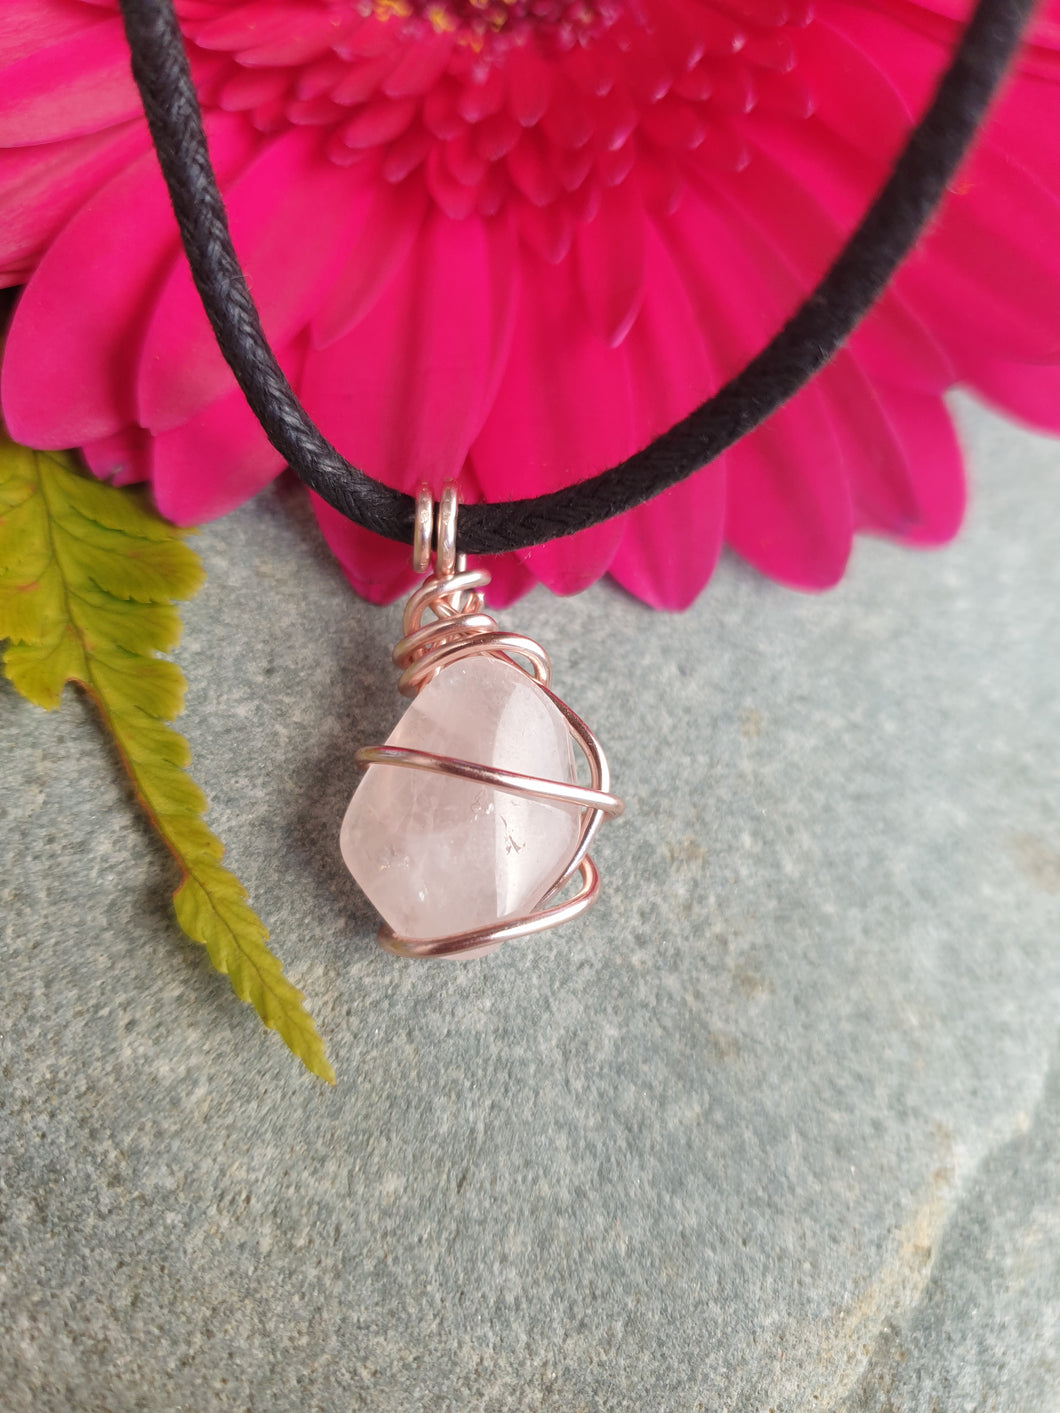 Rose quartz pendant necklace